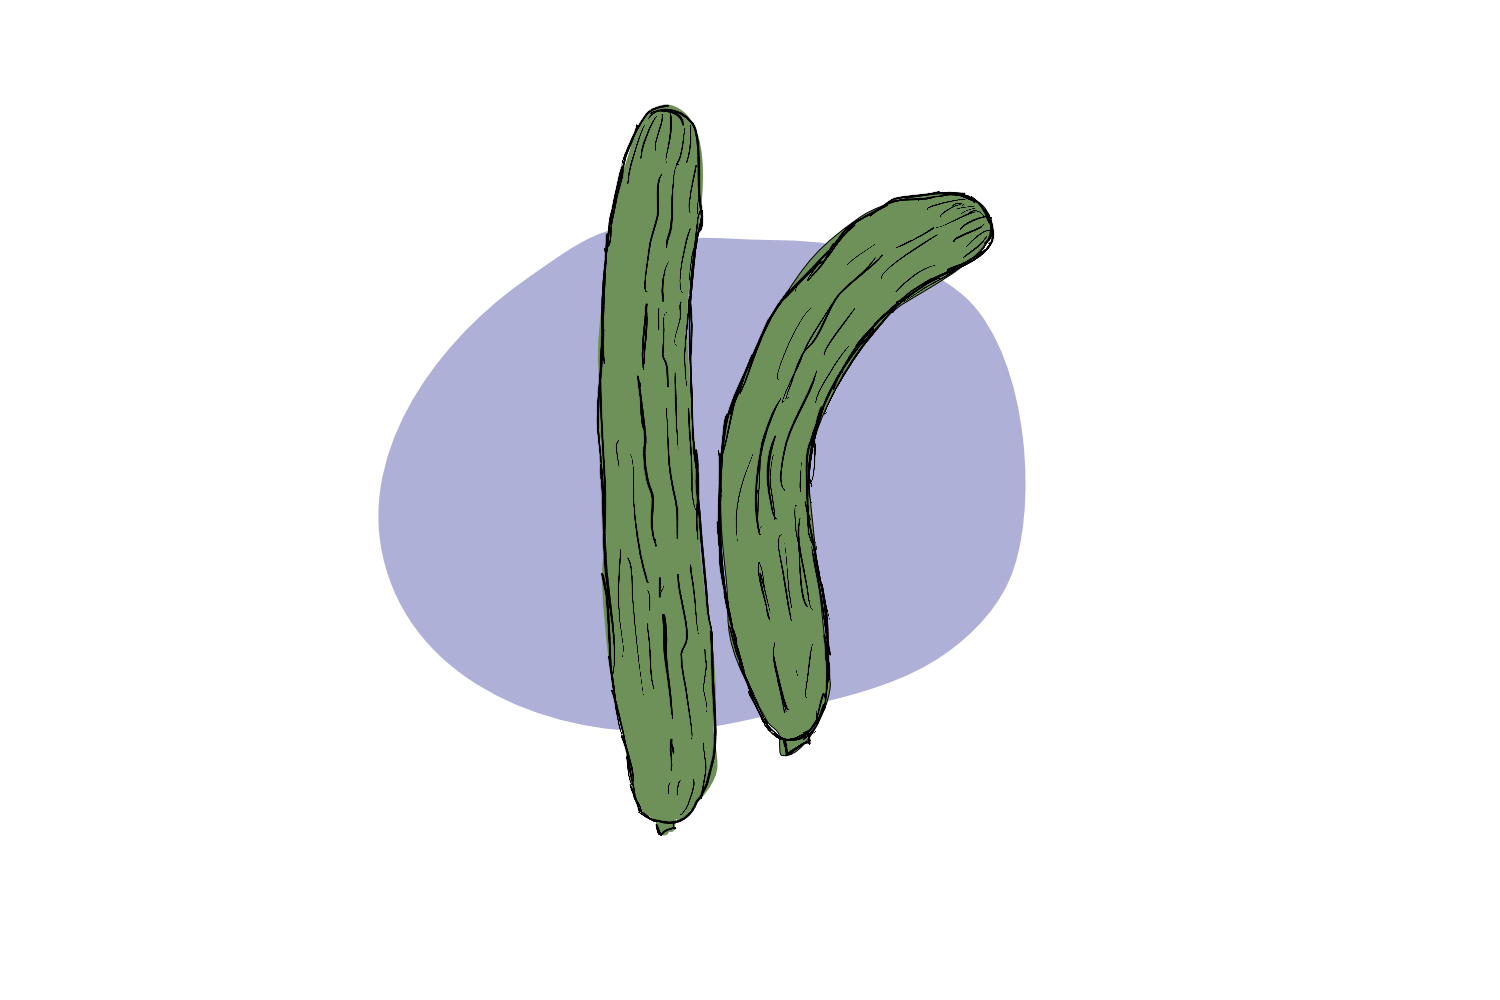 How the Cucumber got its Curve